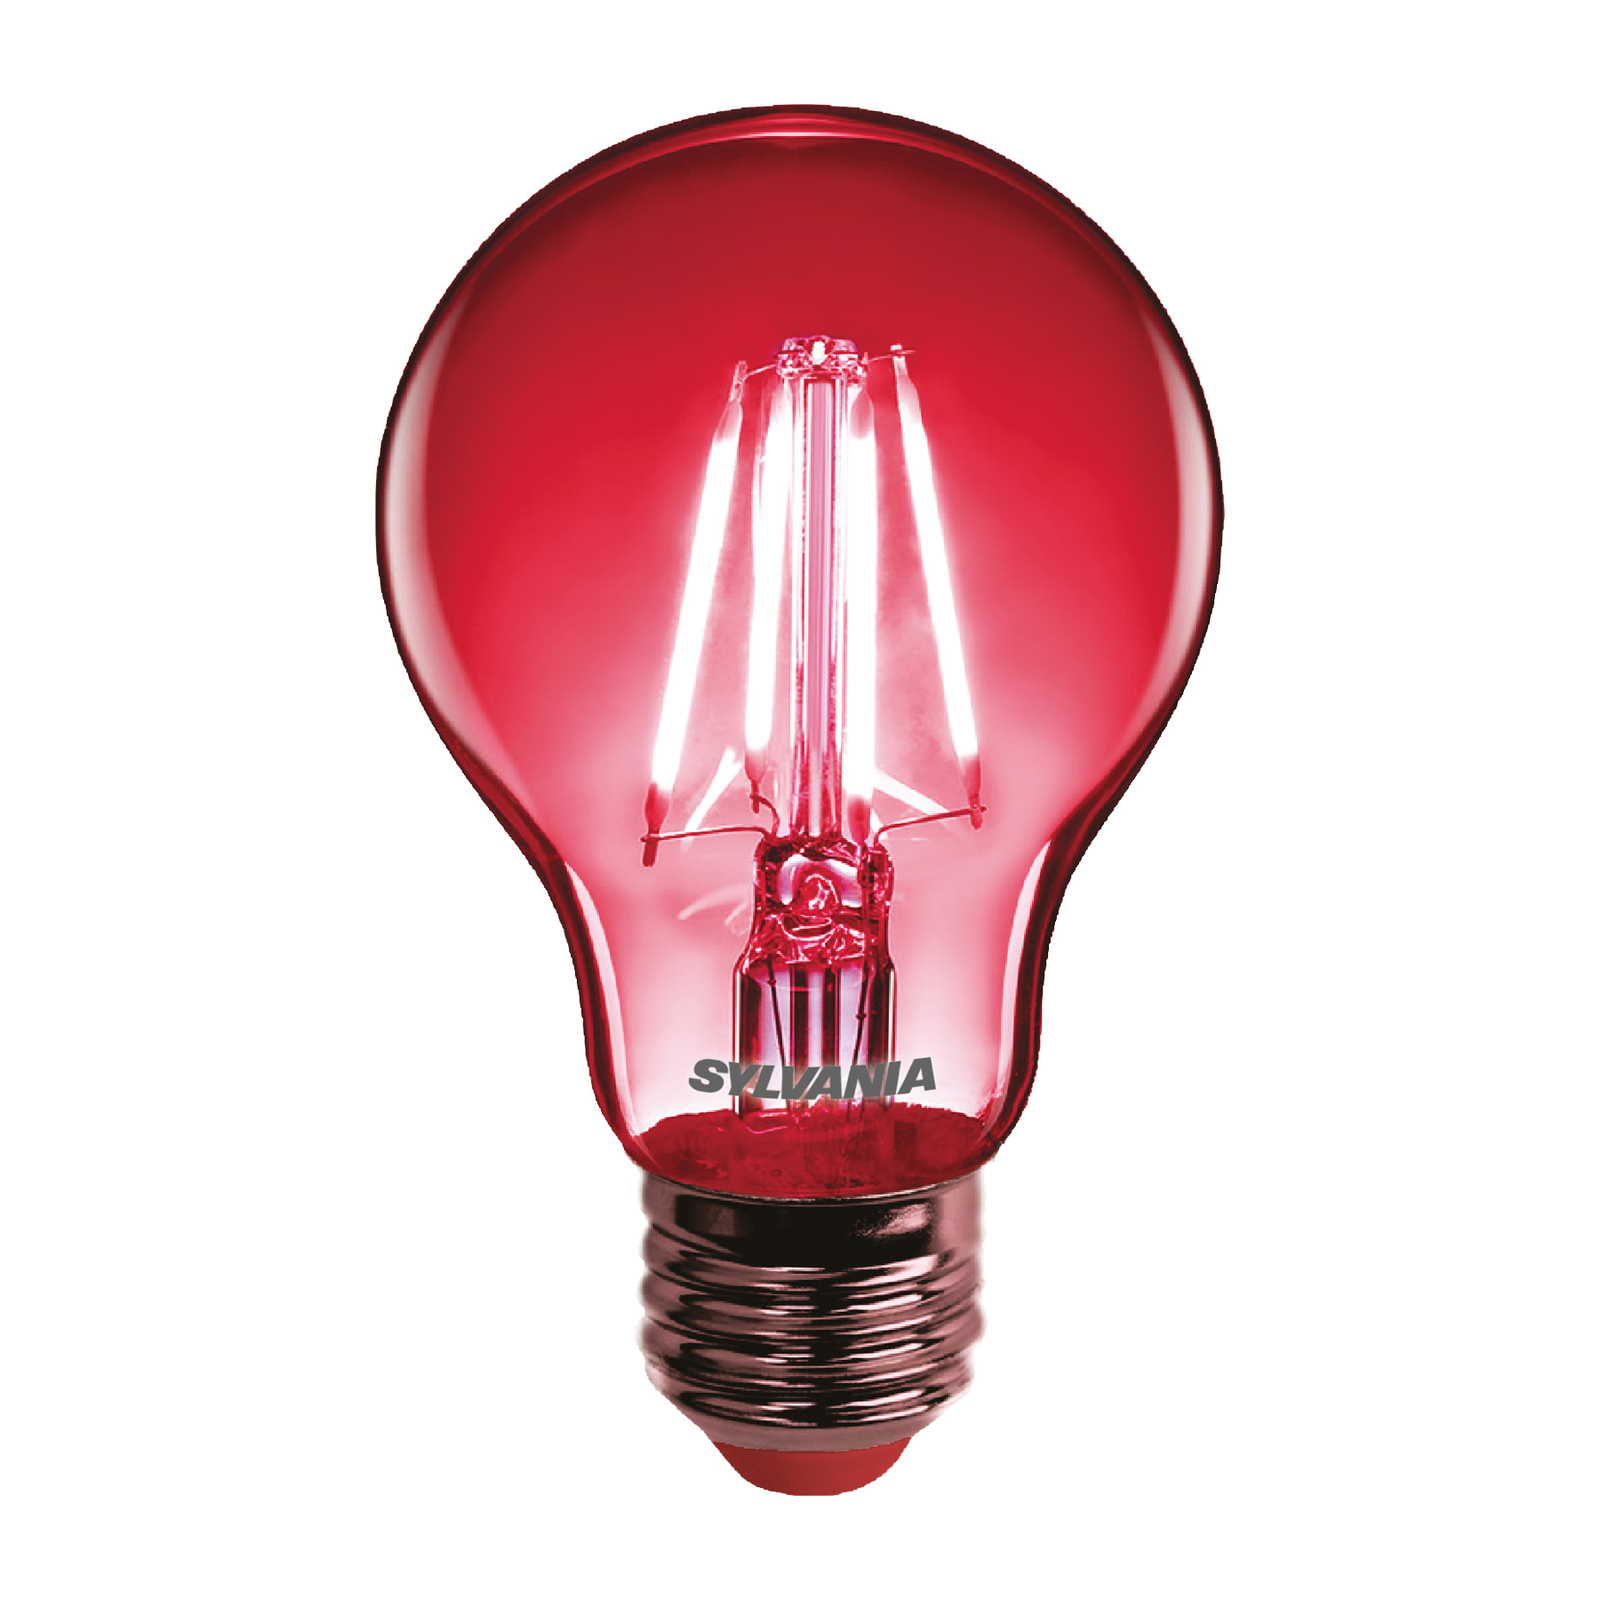 Dwaal ik ben trots welzijn Sylvania ToLEDo Retro LED lamp E27 4,1W rood | Lampen24.nl